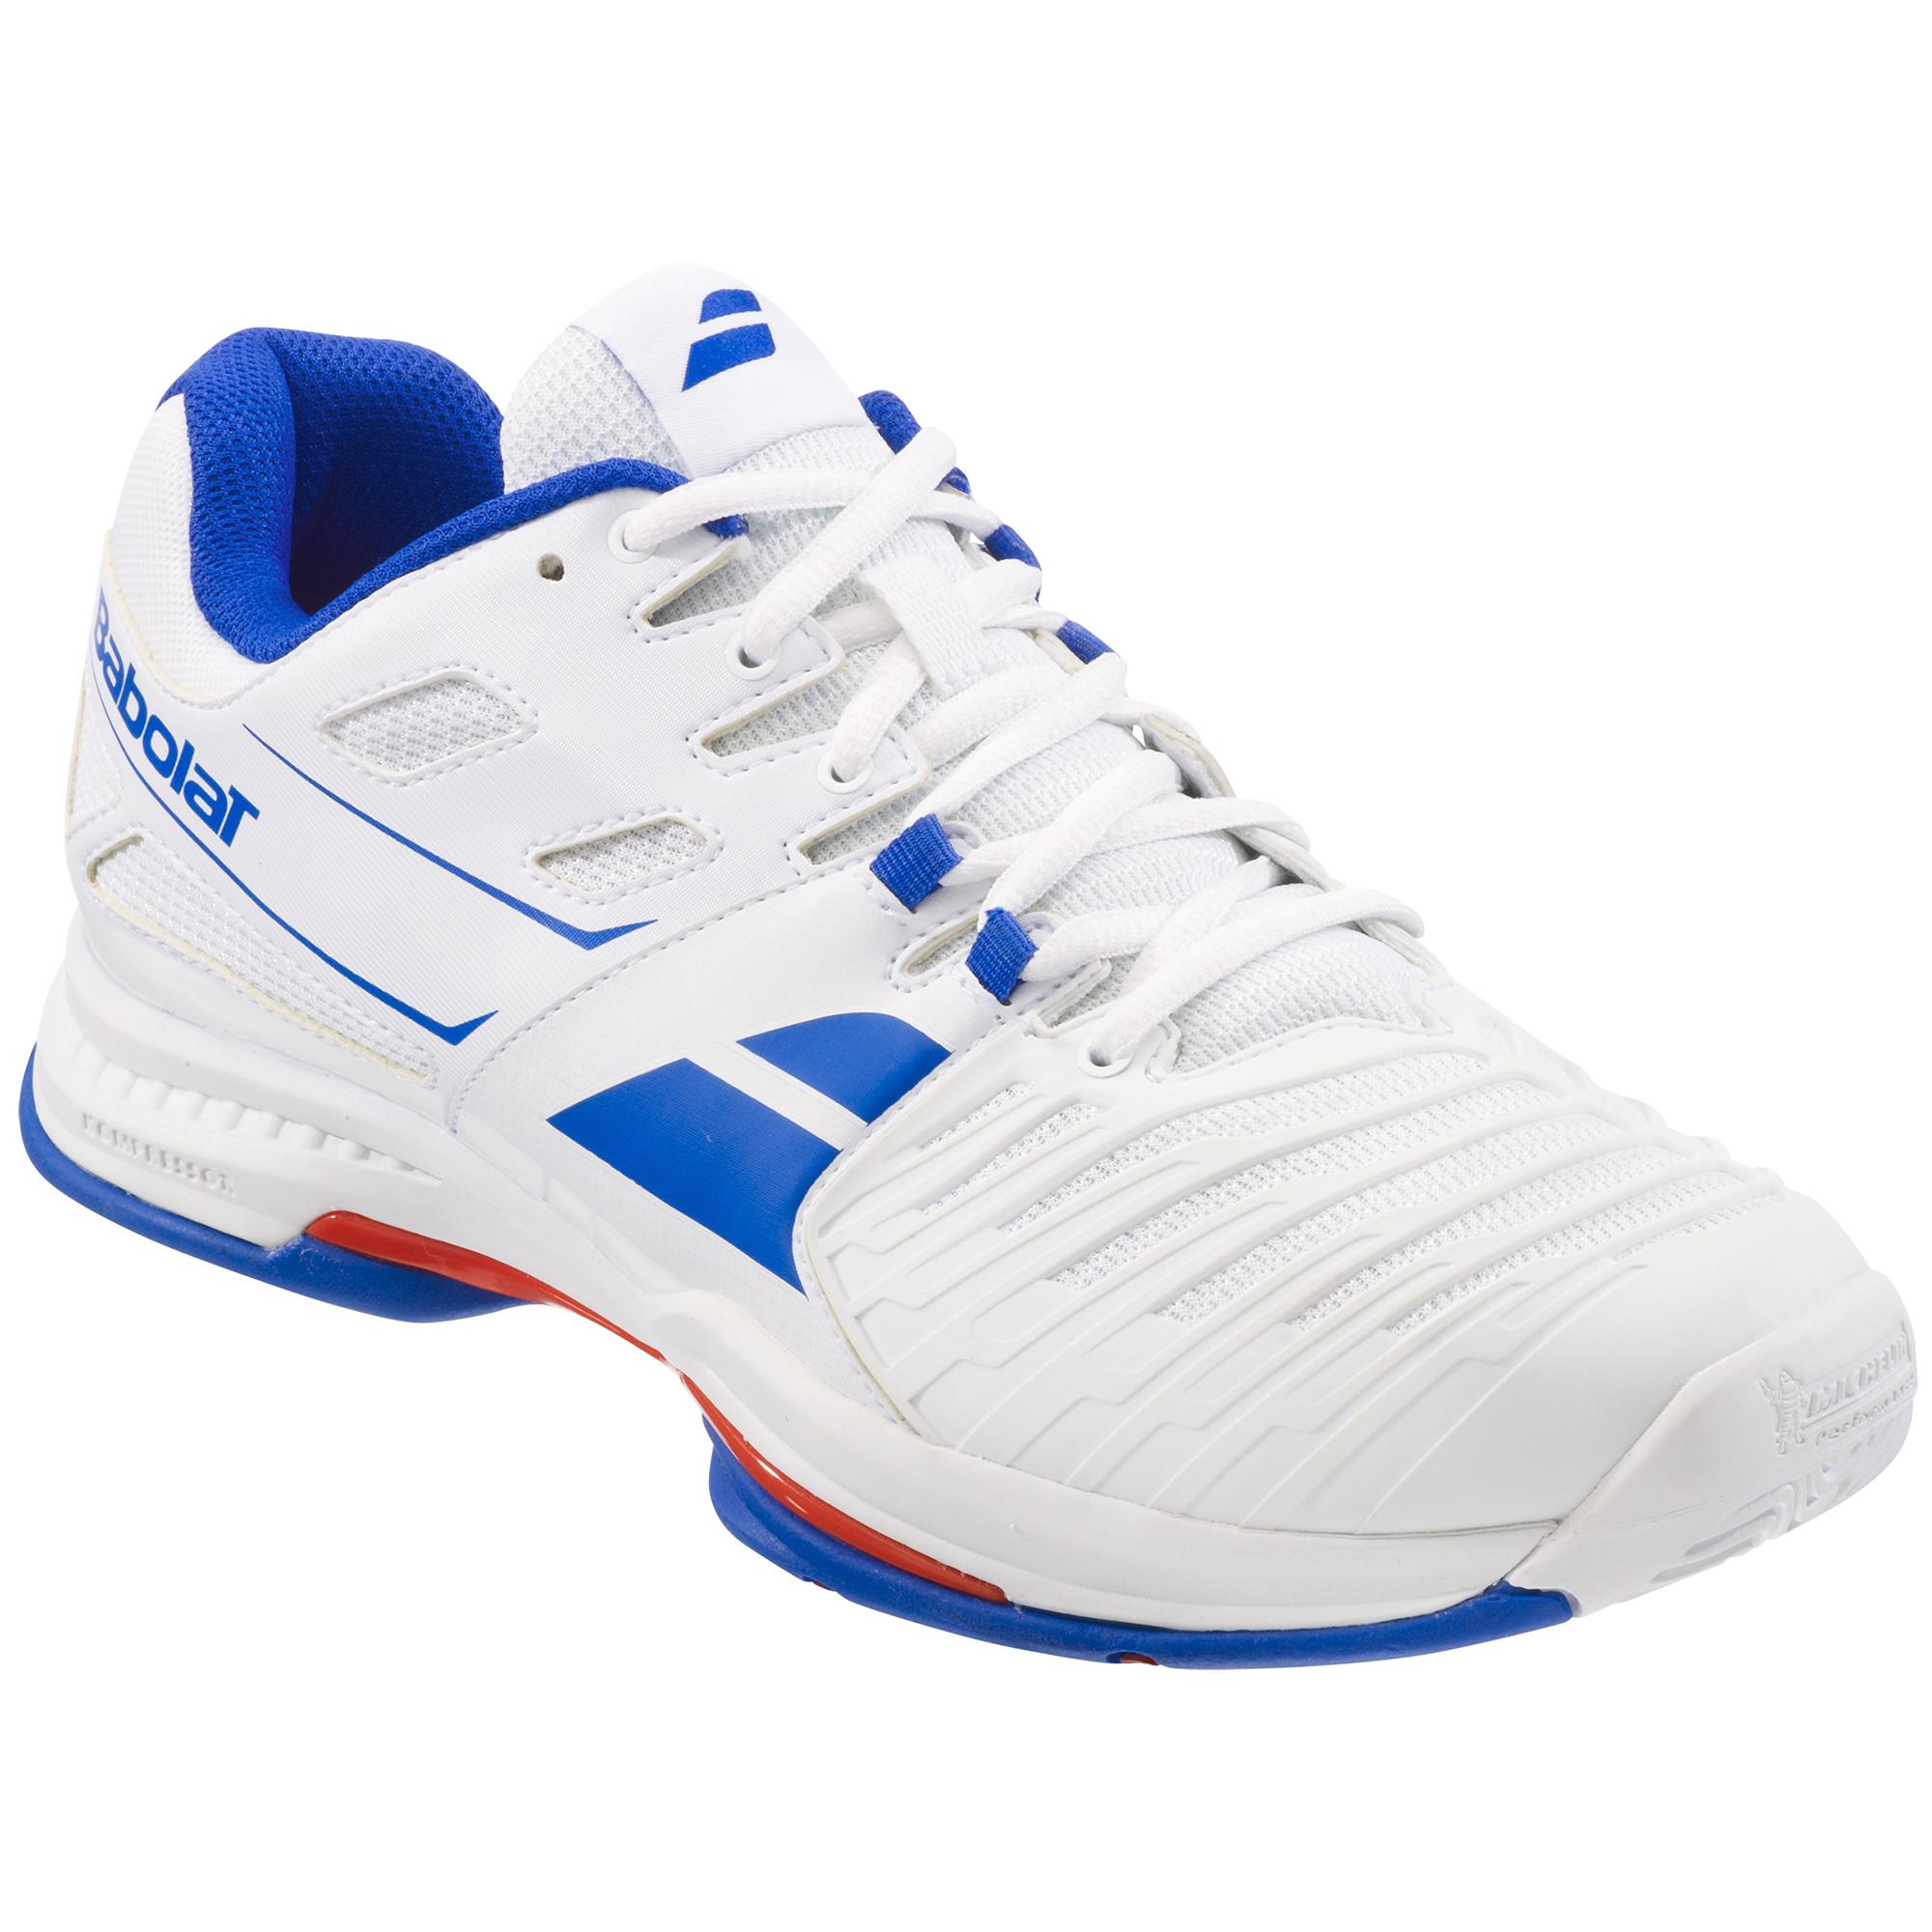 Babolat Mens SFX All Court Tennis Shoes - White/Blue - Tennisnuts.com